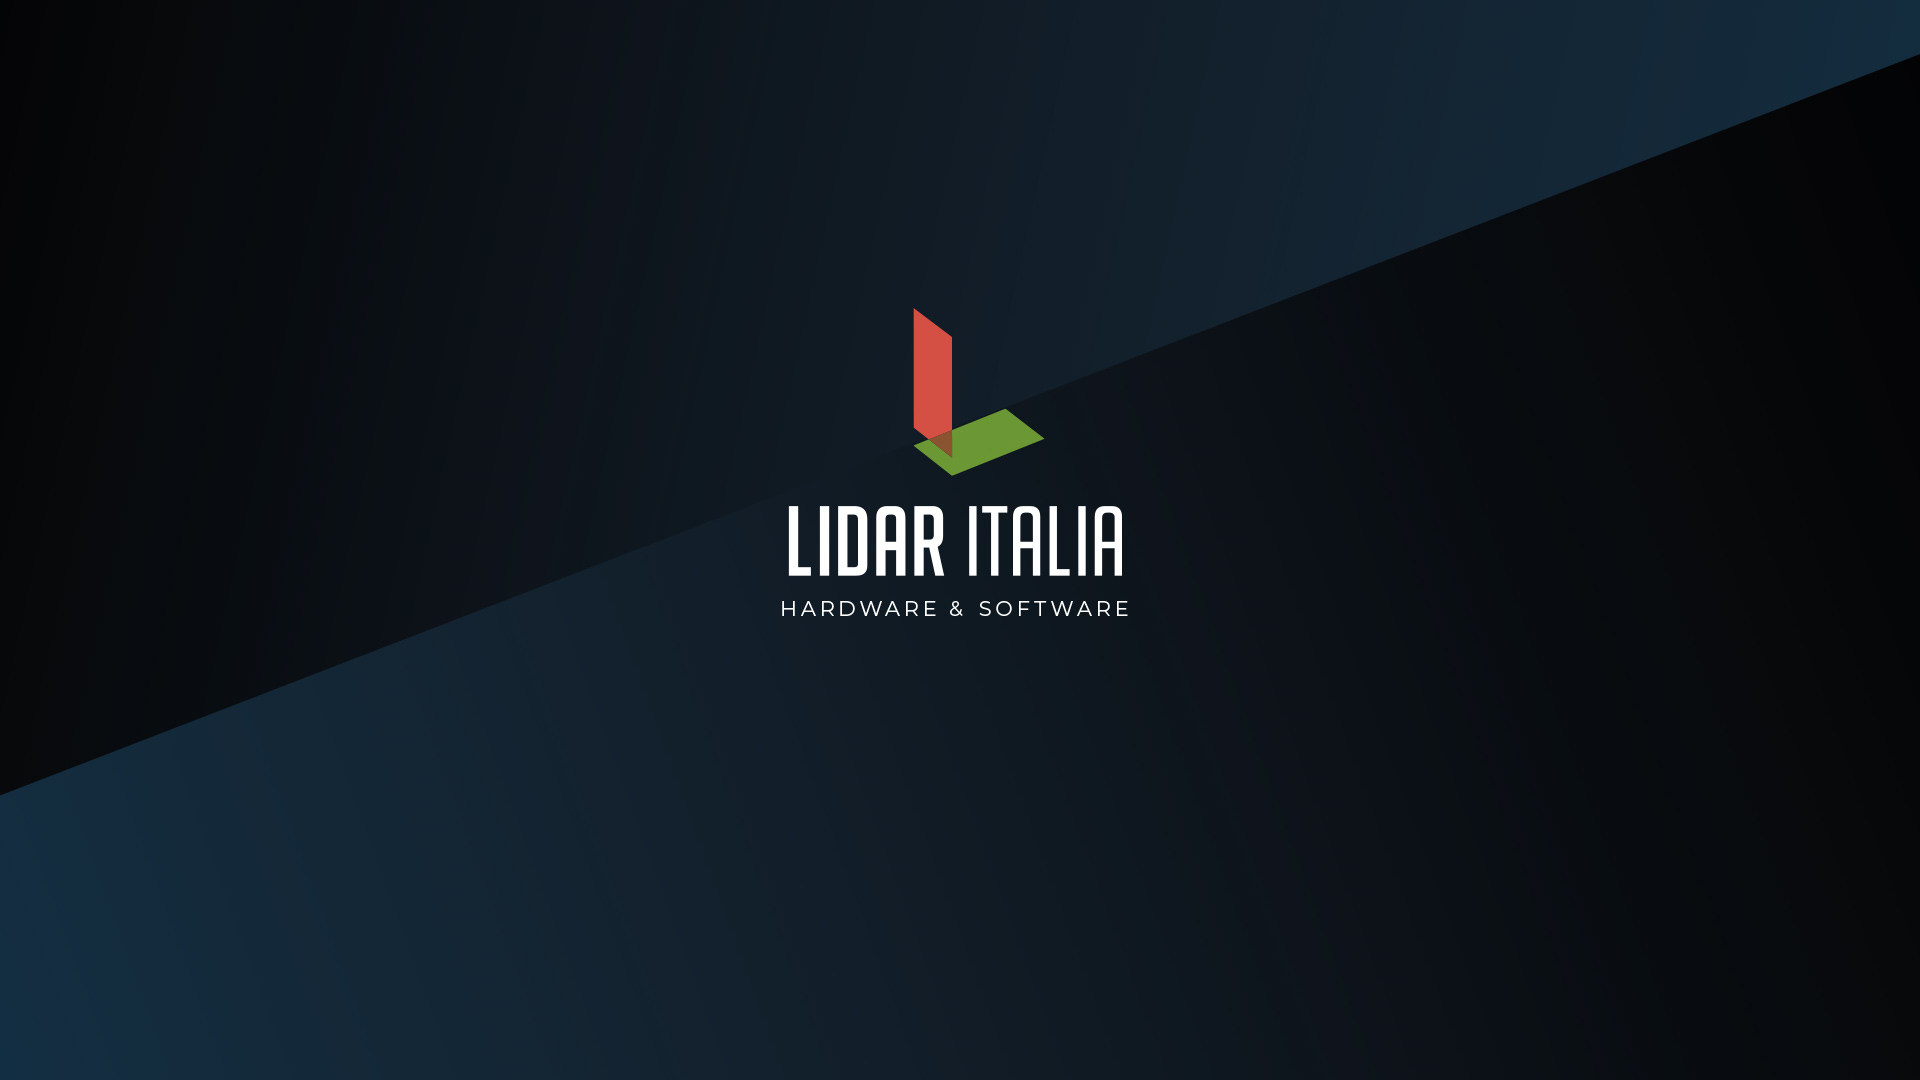 Lidar-italia-logo